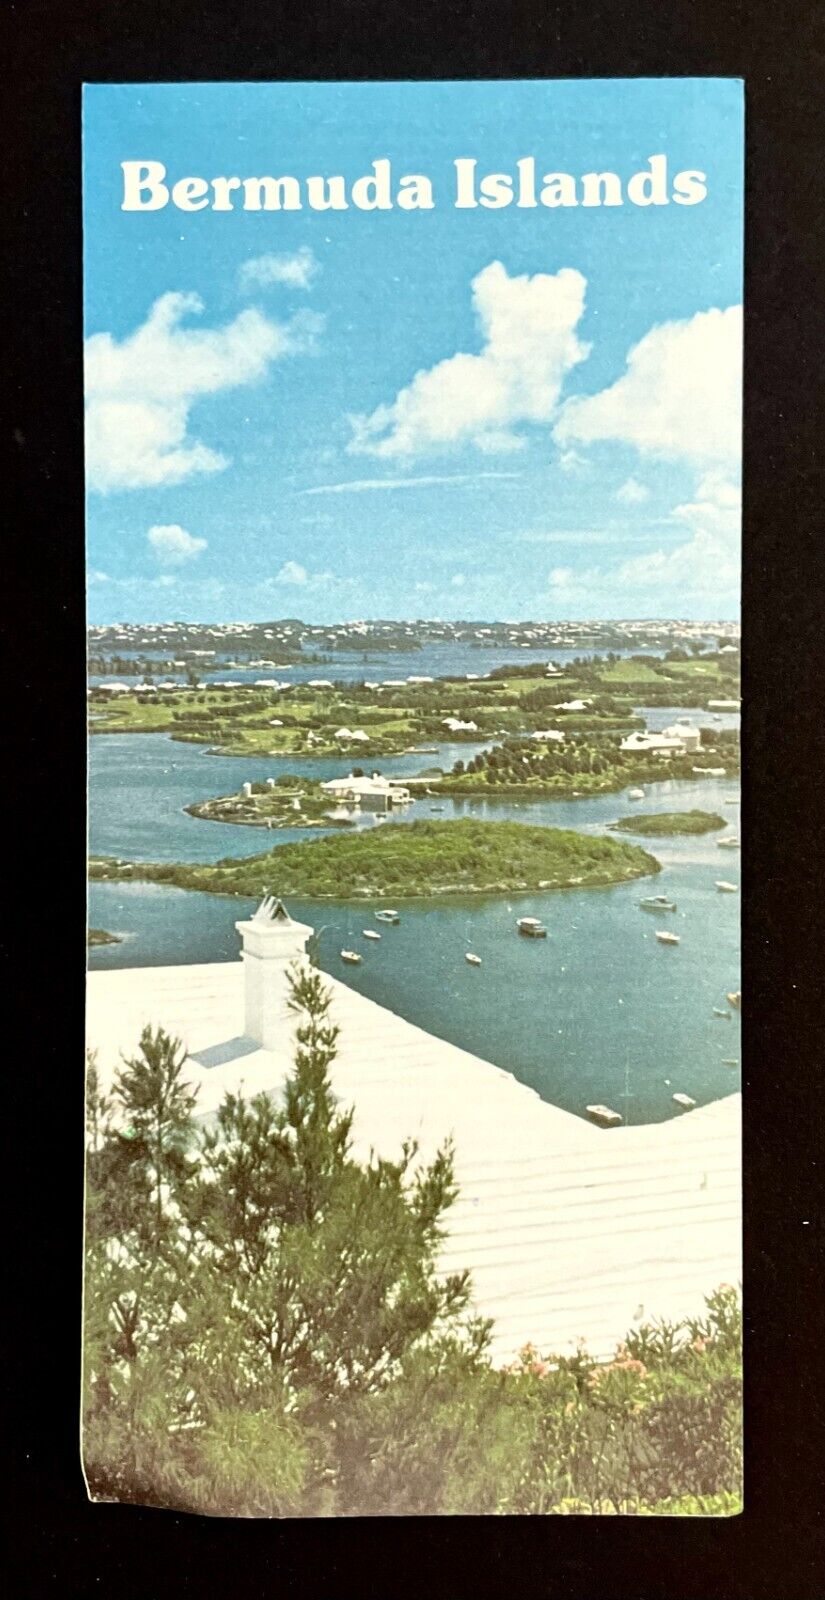 1980 Bermuda Islands Vintage Travel Tourist Information Brochure Economy Climate